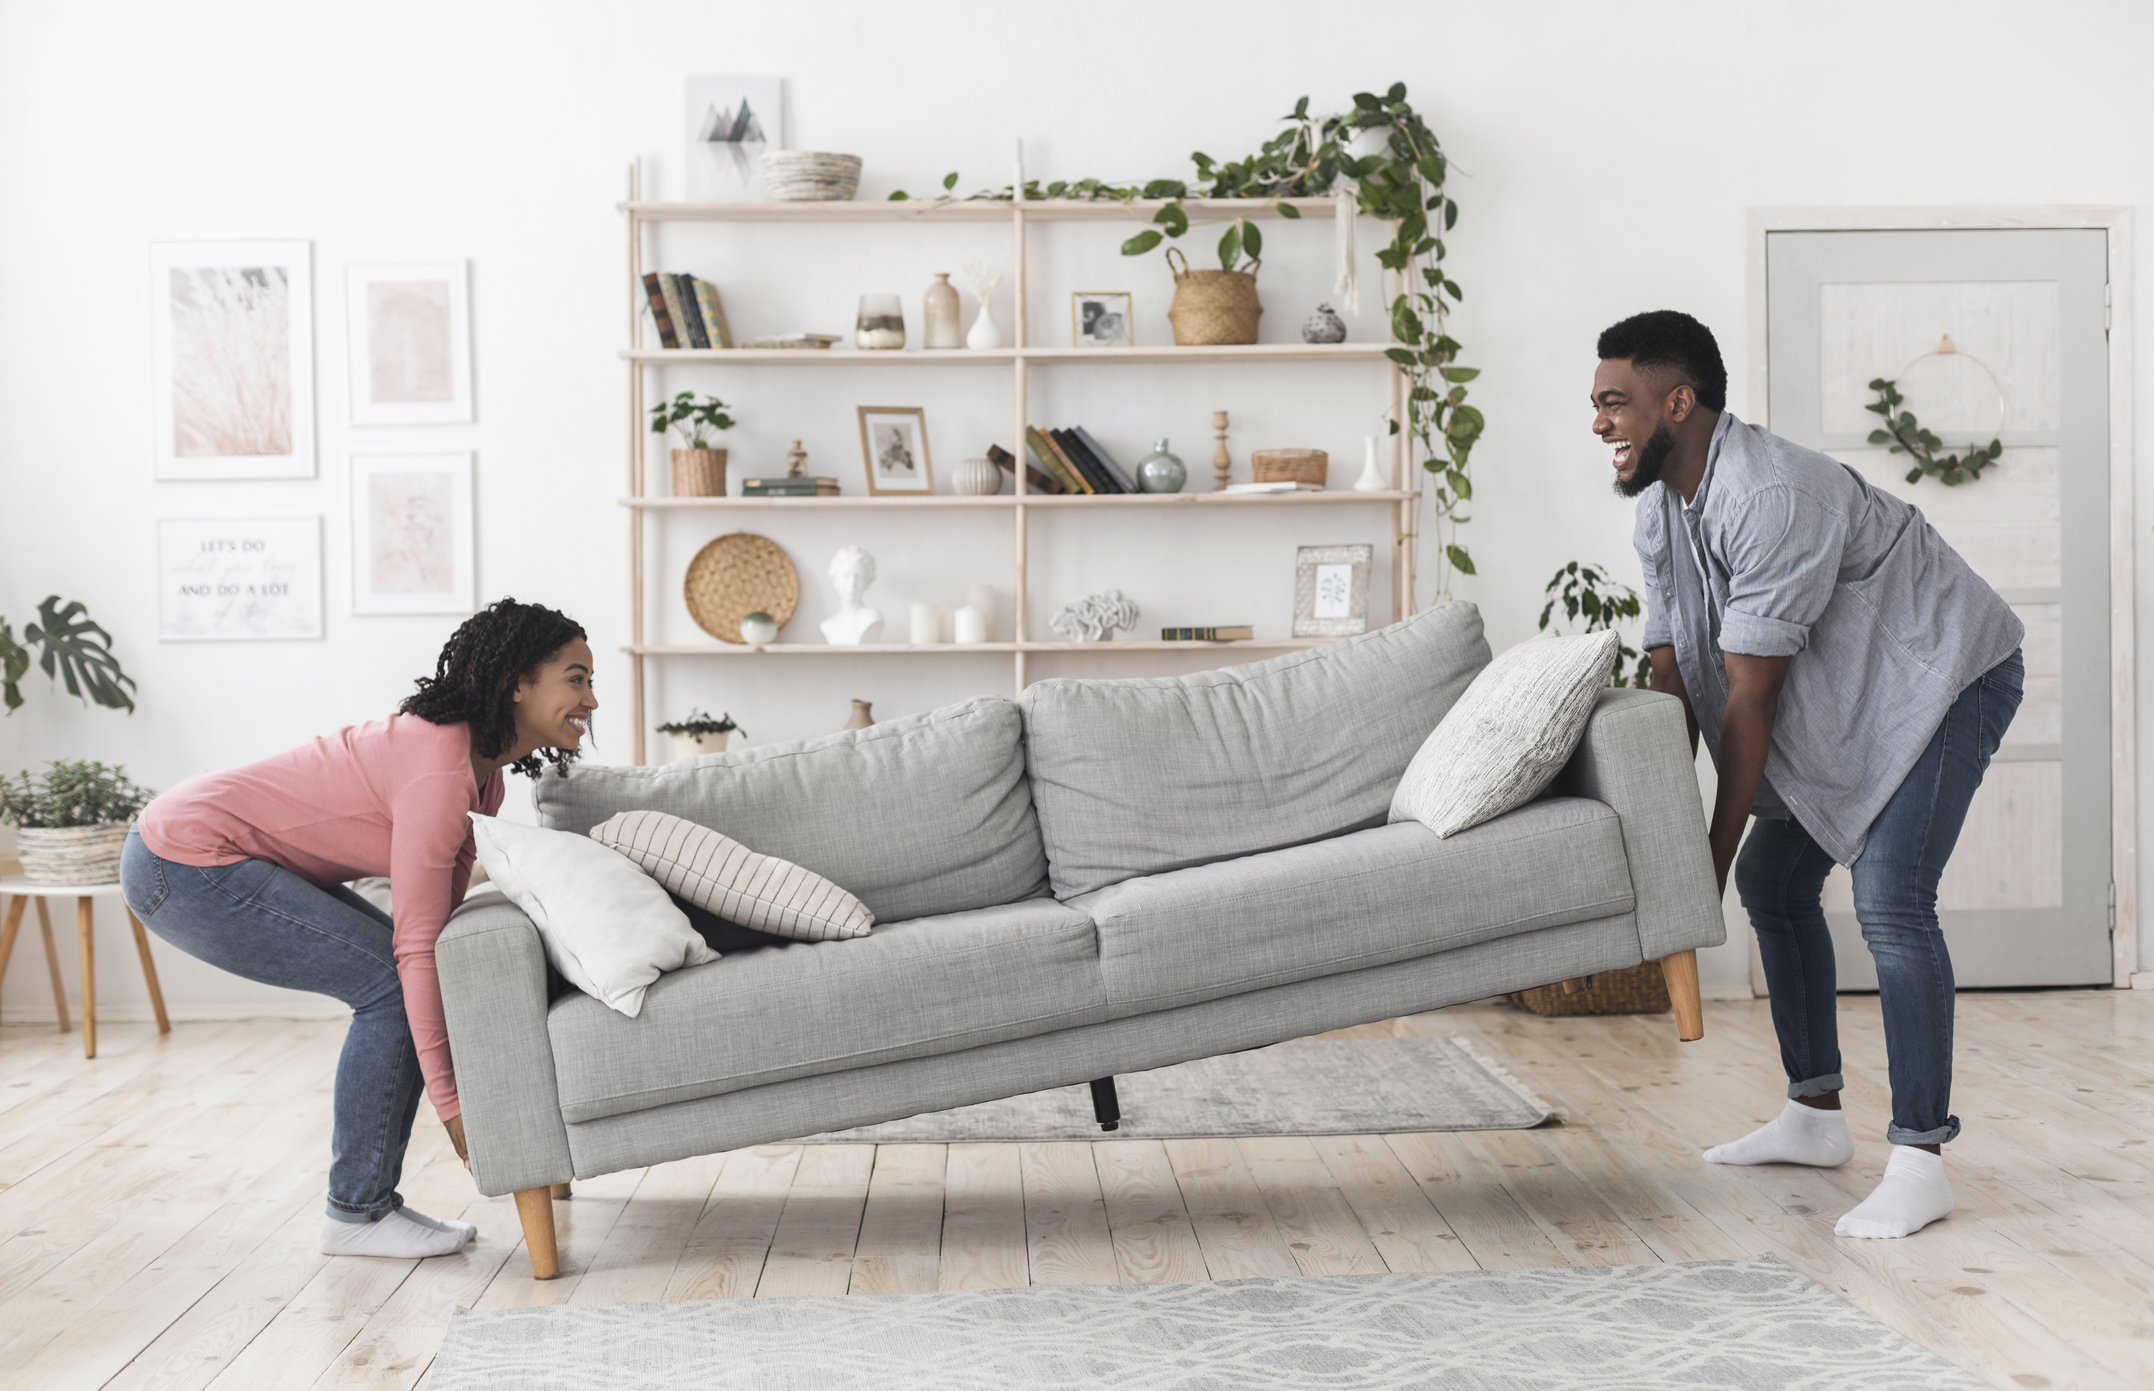 Furniture Shopping: Ashley Homestore VS Rooms to Go 